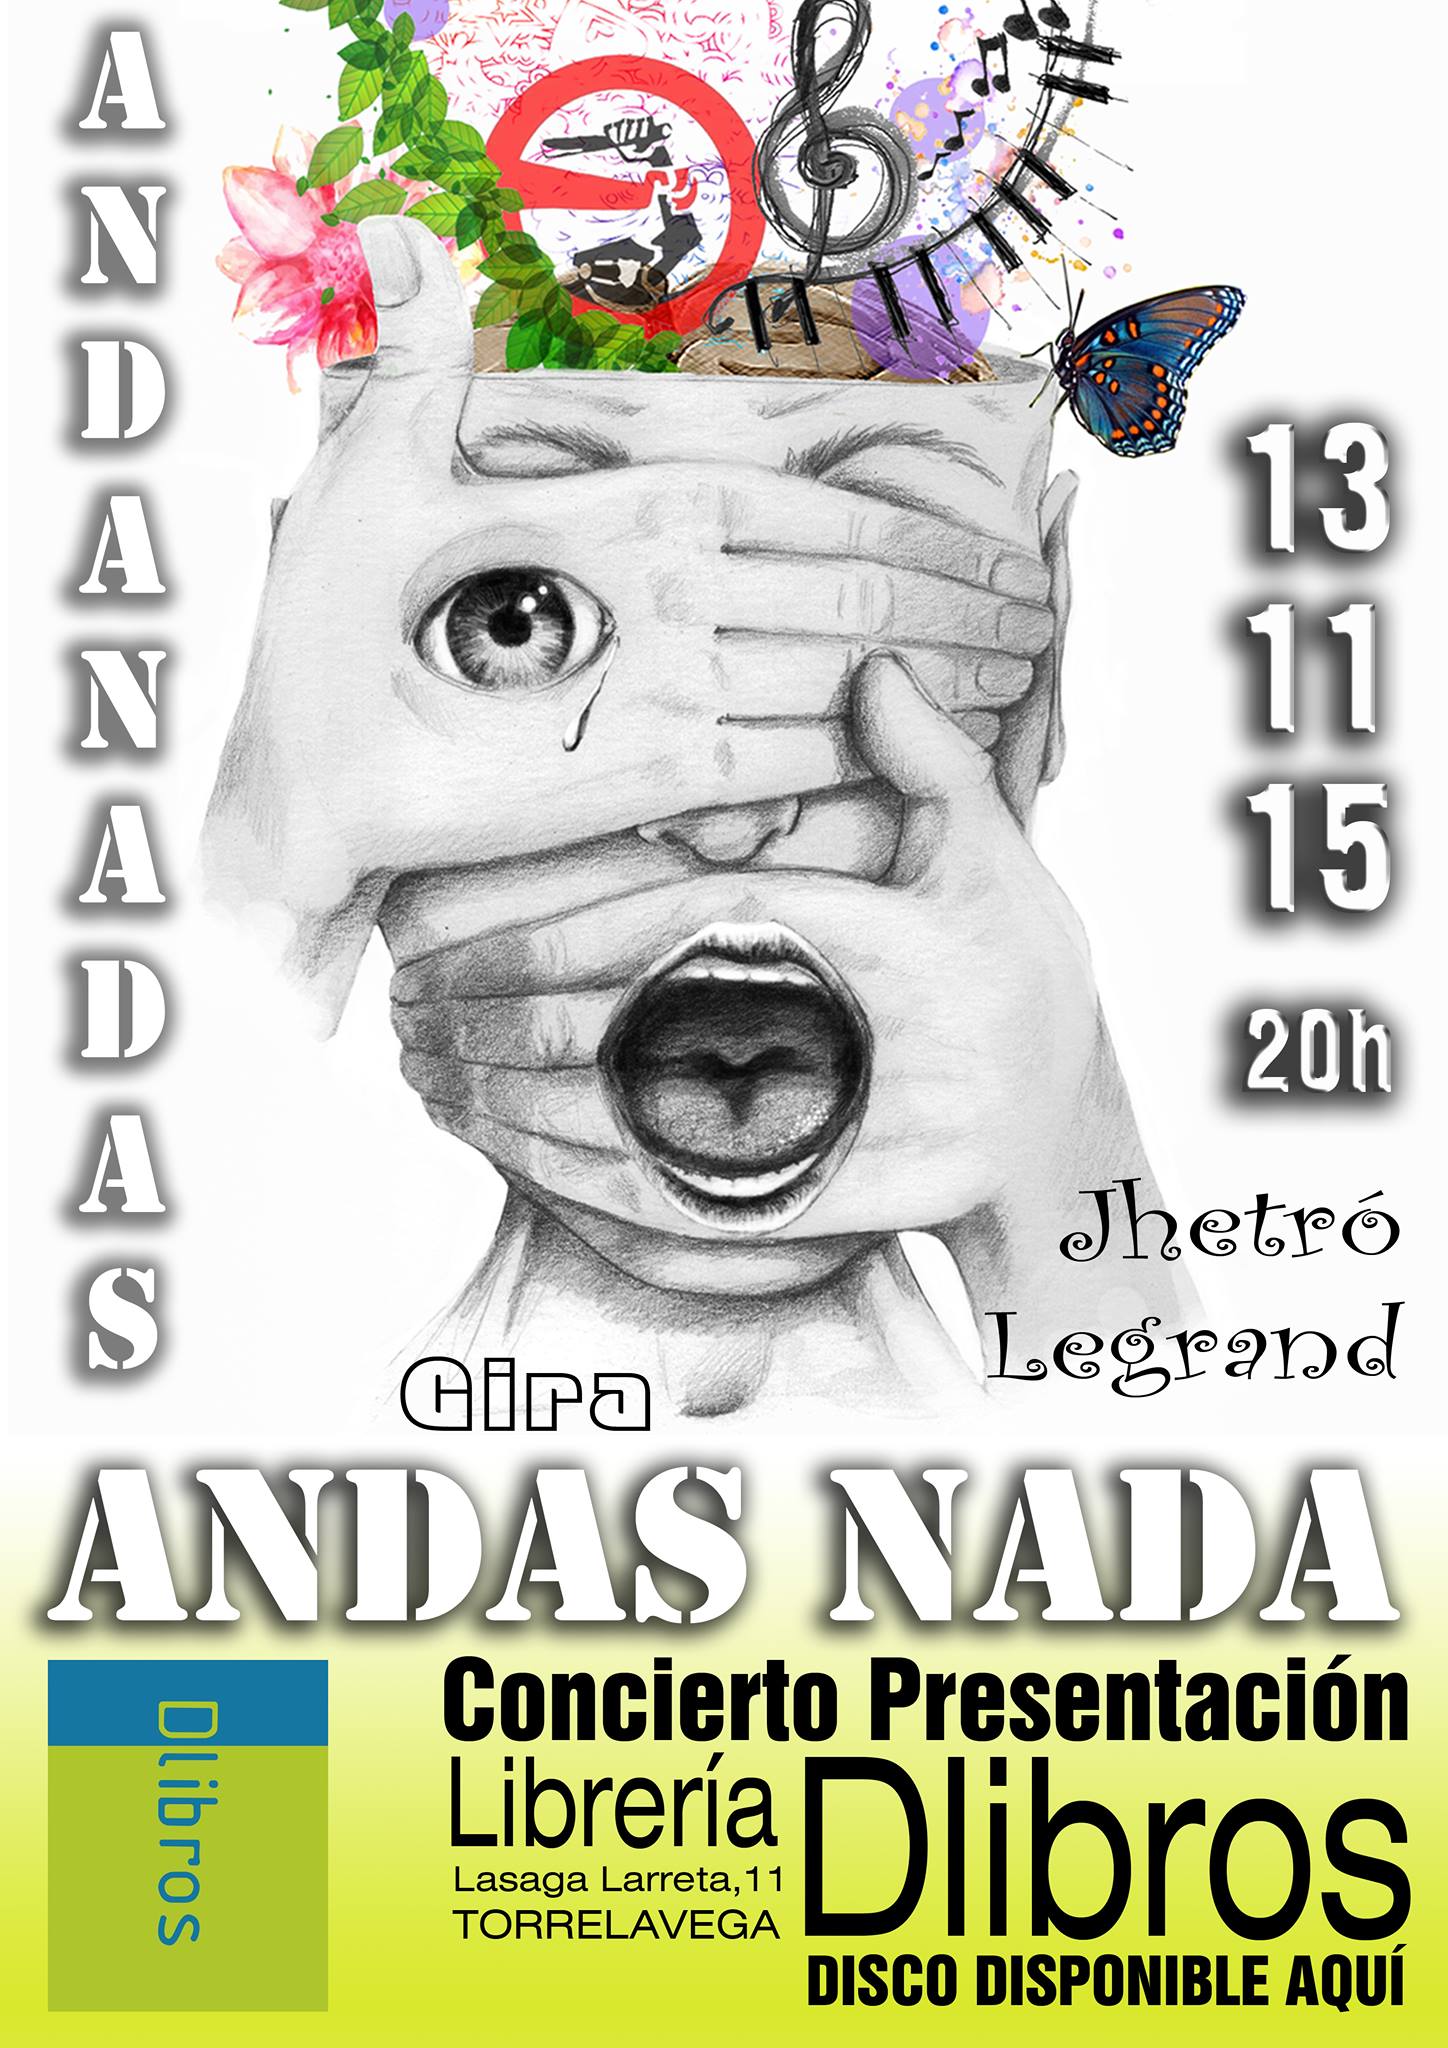 Cartel de presentación de la gira 'Andas Nada'.